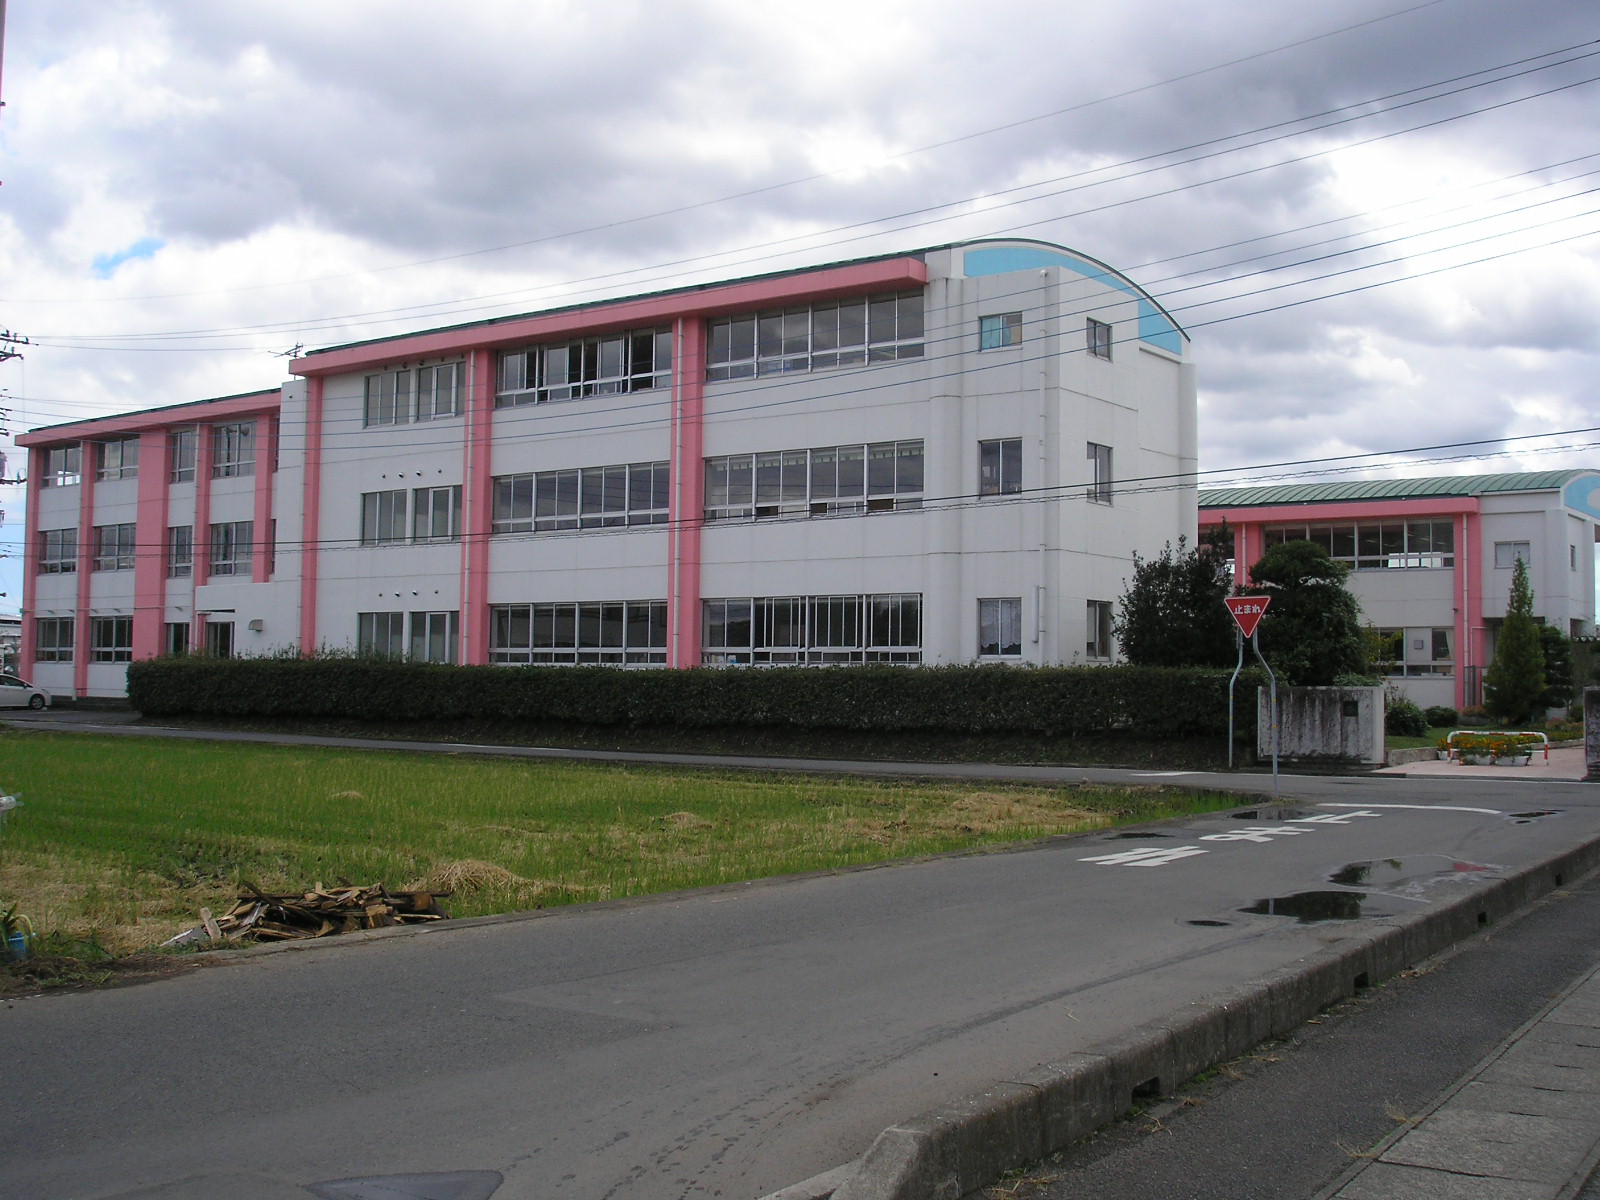 Primary school. 1026m until Hitachiōmiya stand Ueno elementary school (elementary school)